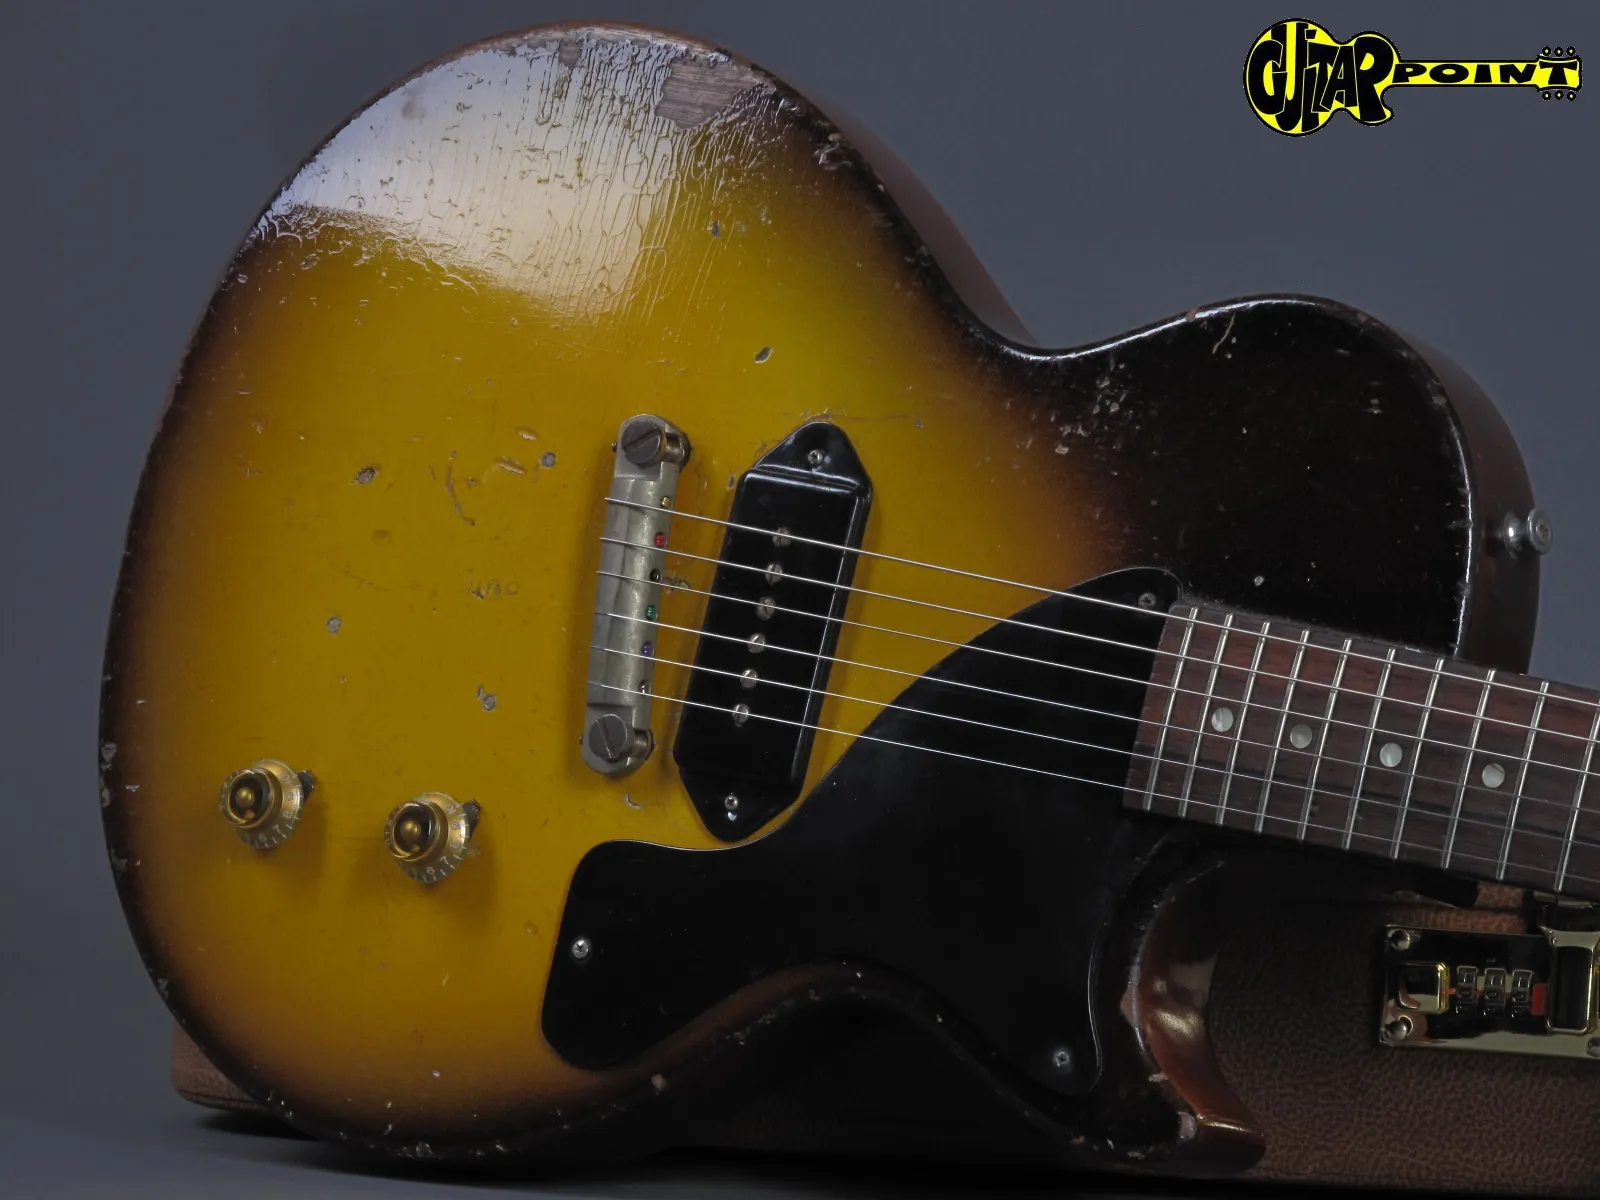 Rare 1957 Junior Tobacco Sunburst Dark Brown Heavy Relic Electric Guitar Single Cut Body, 1 Piece Neck (No Scarf Joint), P-90 Dog Ear Pickup